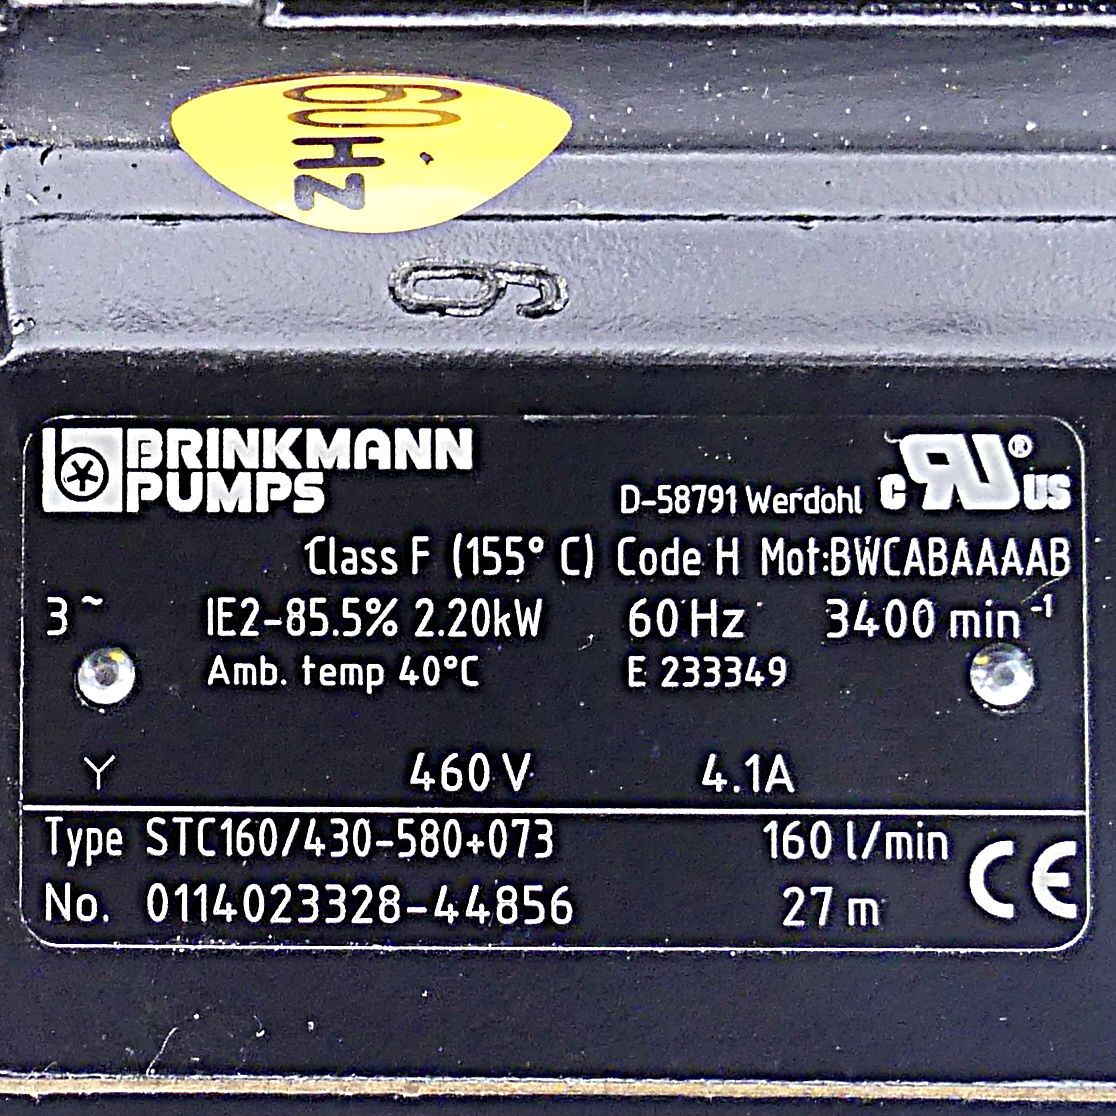 Submersible pump  STC160/430-580+073 